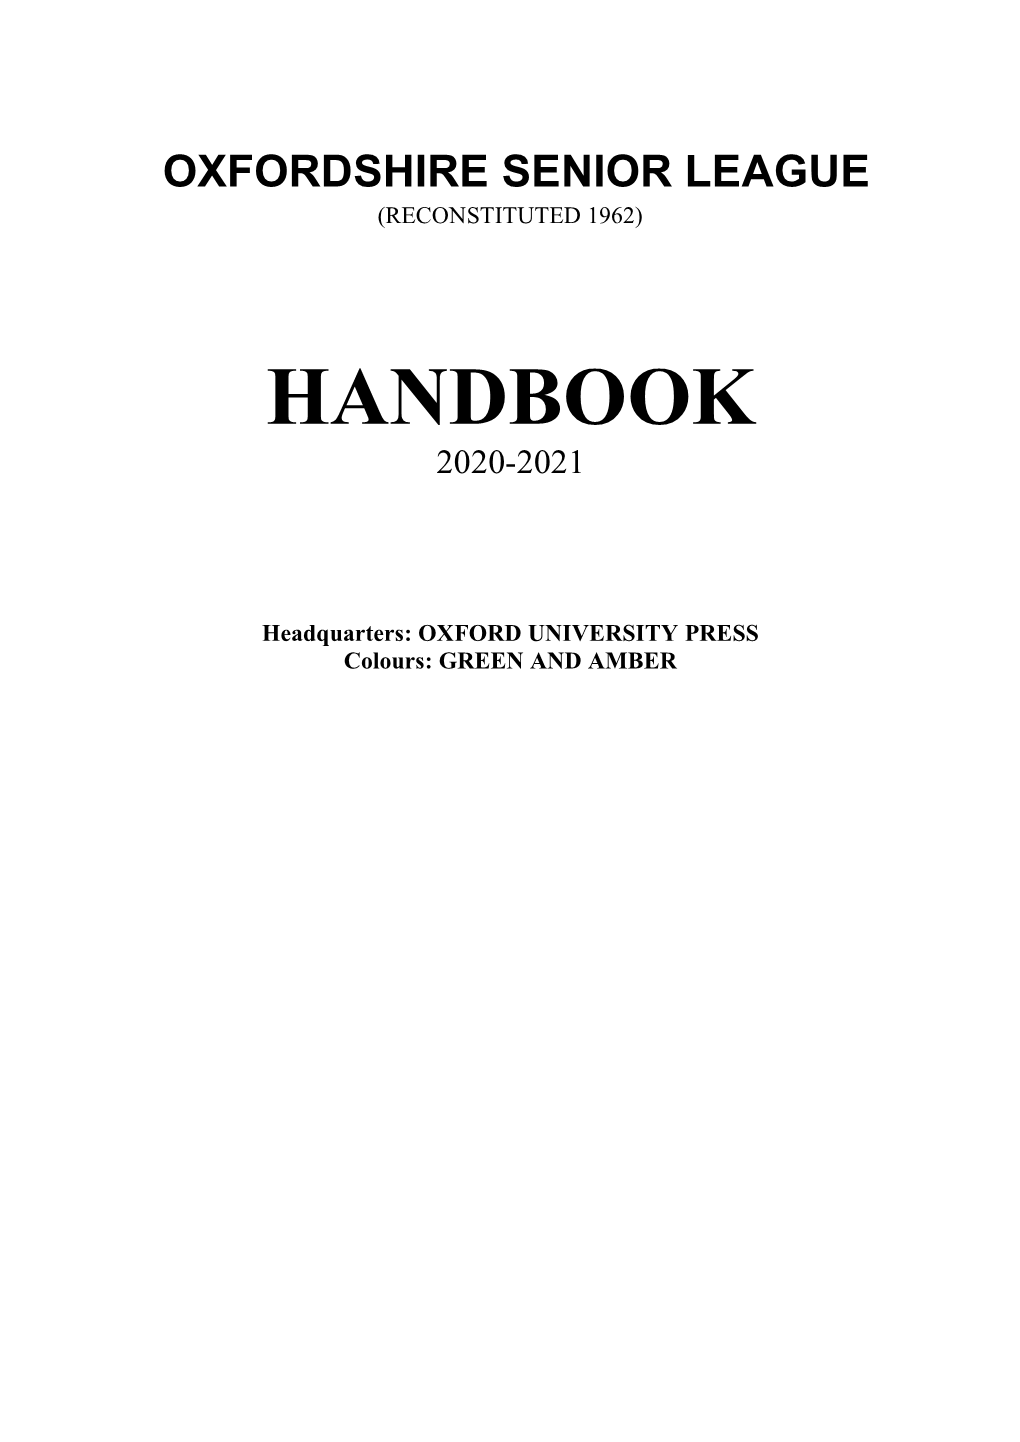 Handbook 2020-2021